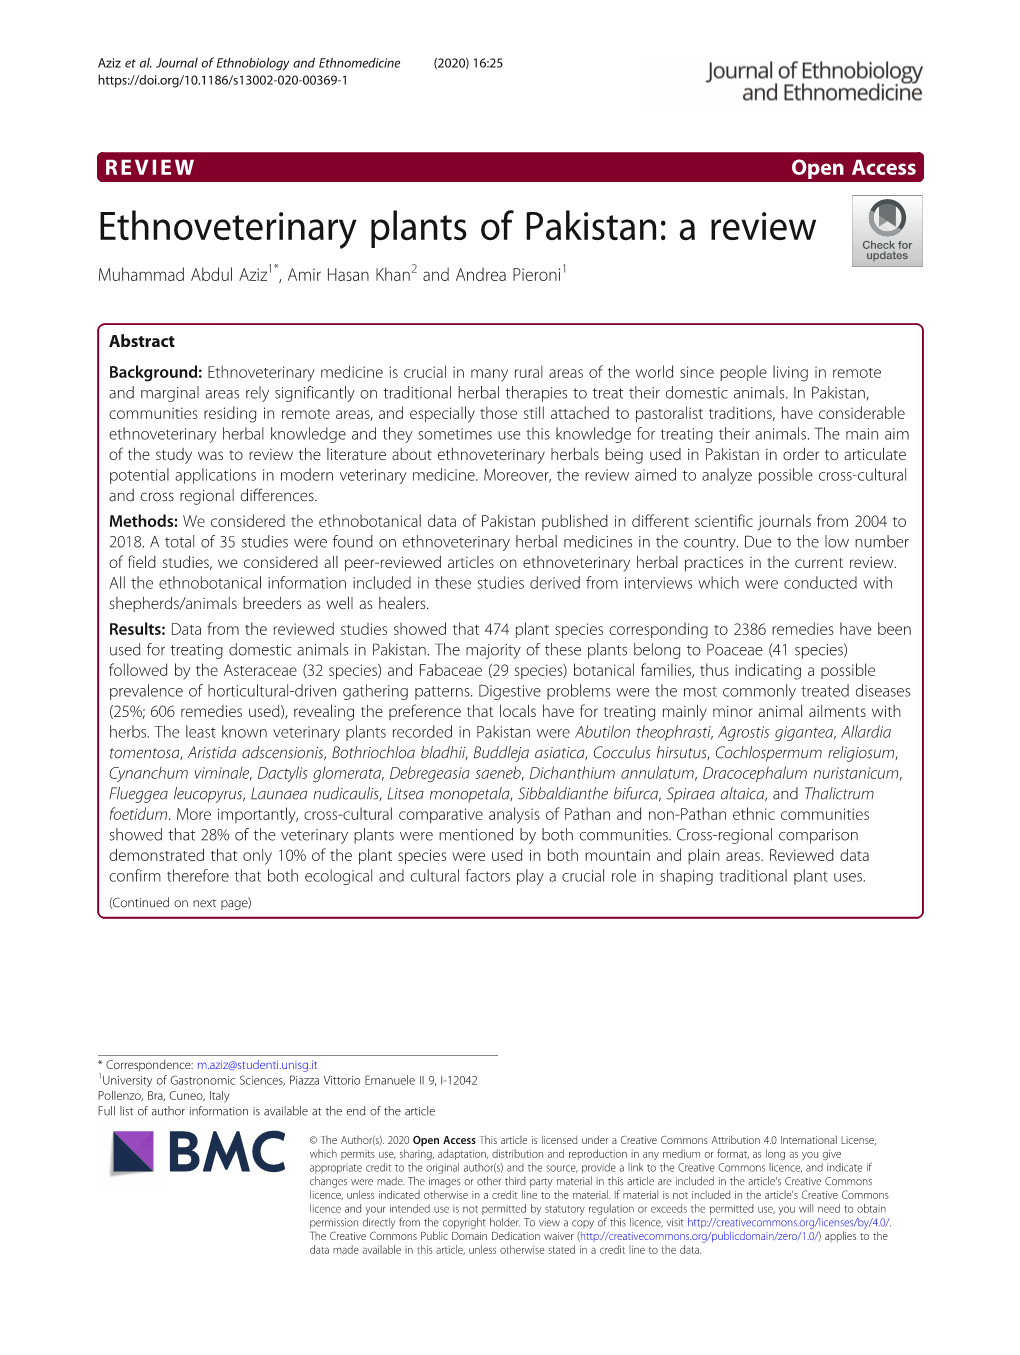 Ethnoveterinary Plants of Pakistan: a Review Muhammad Abdul Aziz1*, Amir Hasan Khan2 and Andrea Pieroni1